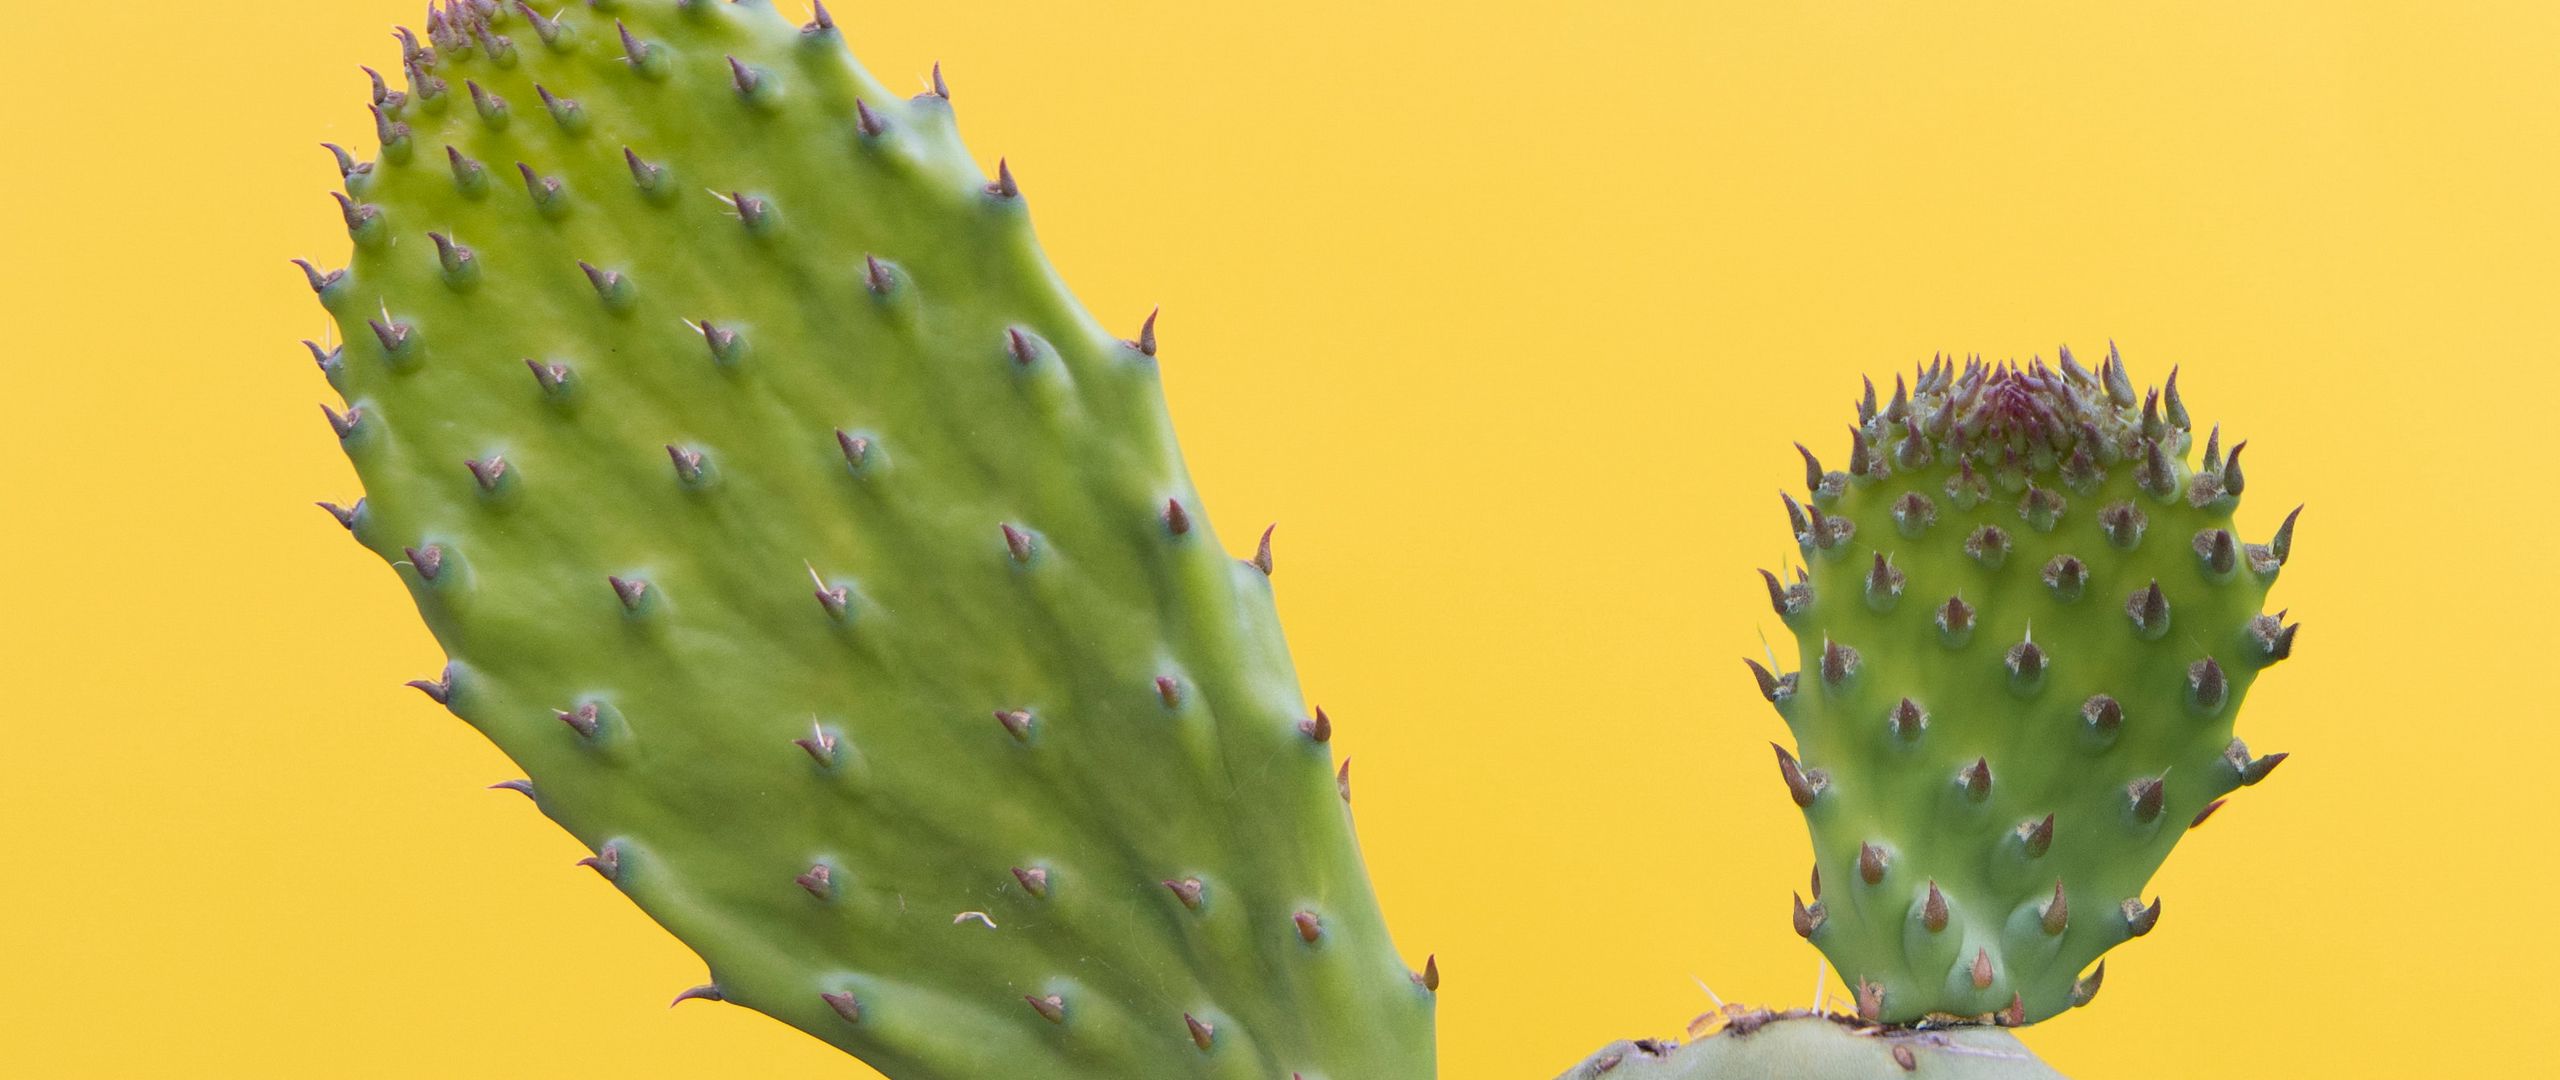 2560x1080 Wallpaper cactus, succulent, prickly, green, minimalism